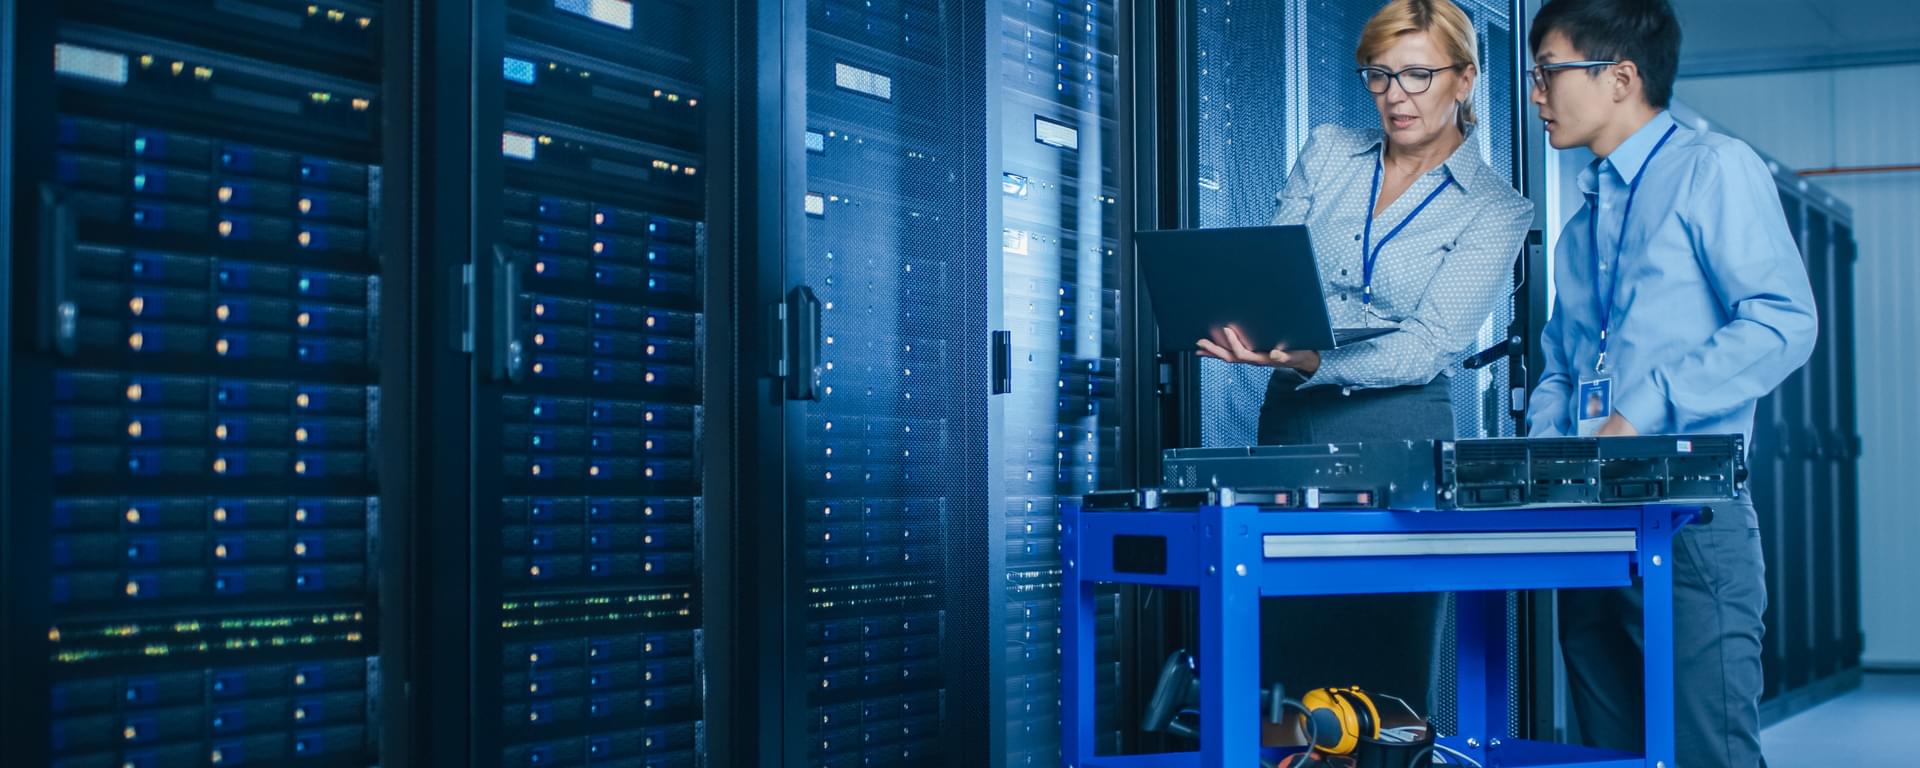 IT engineers installing new hardware on server racks